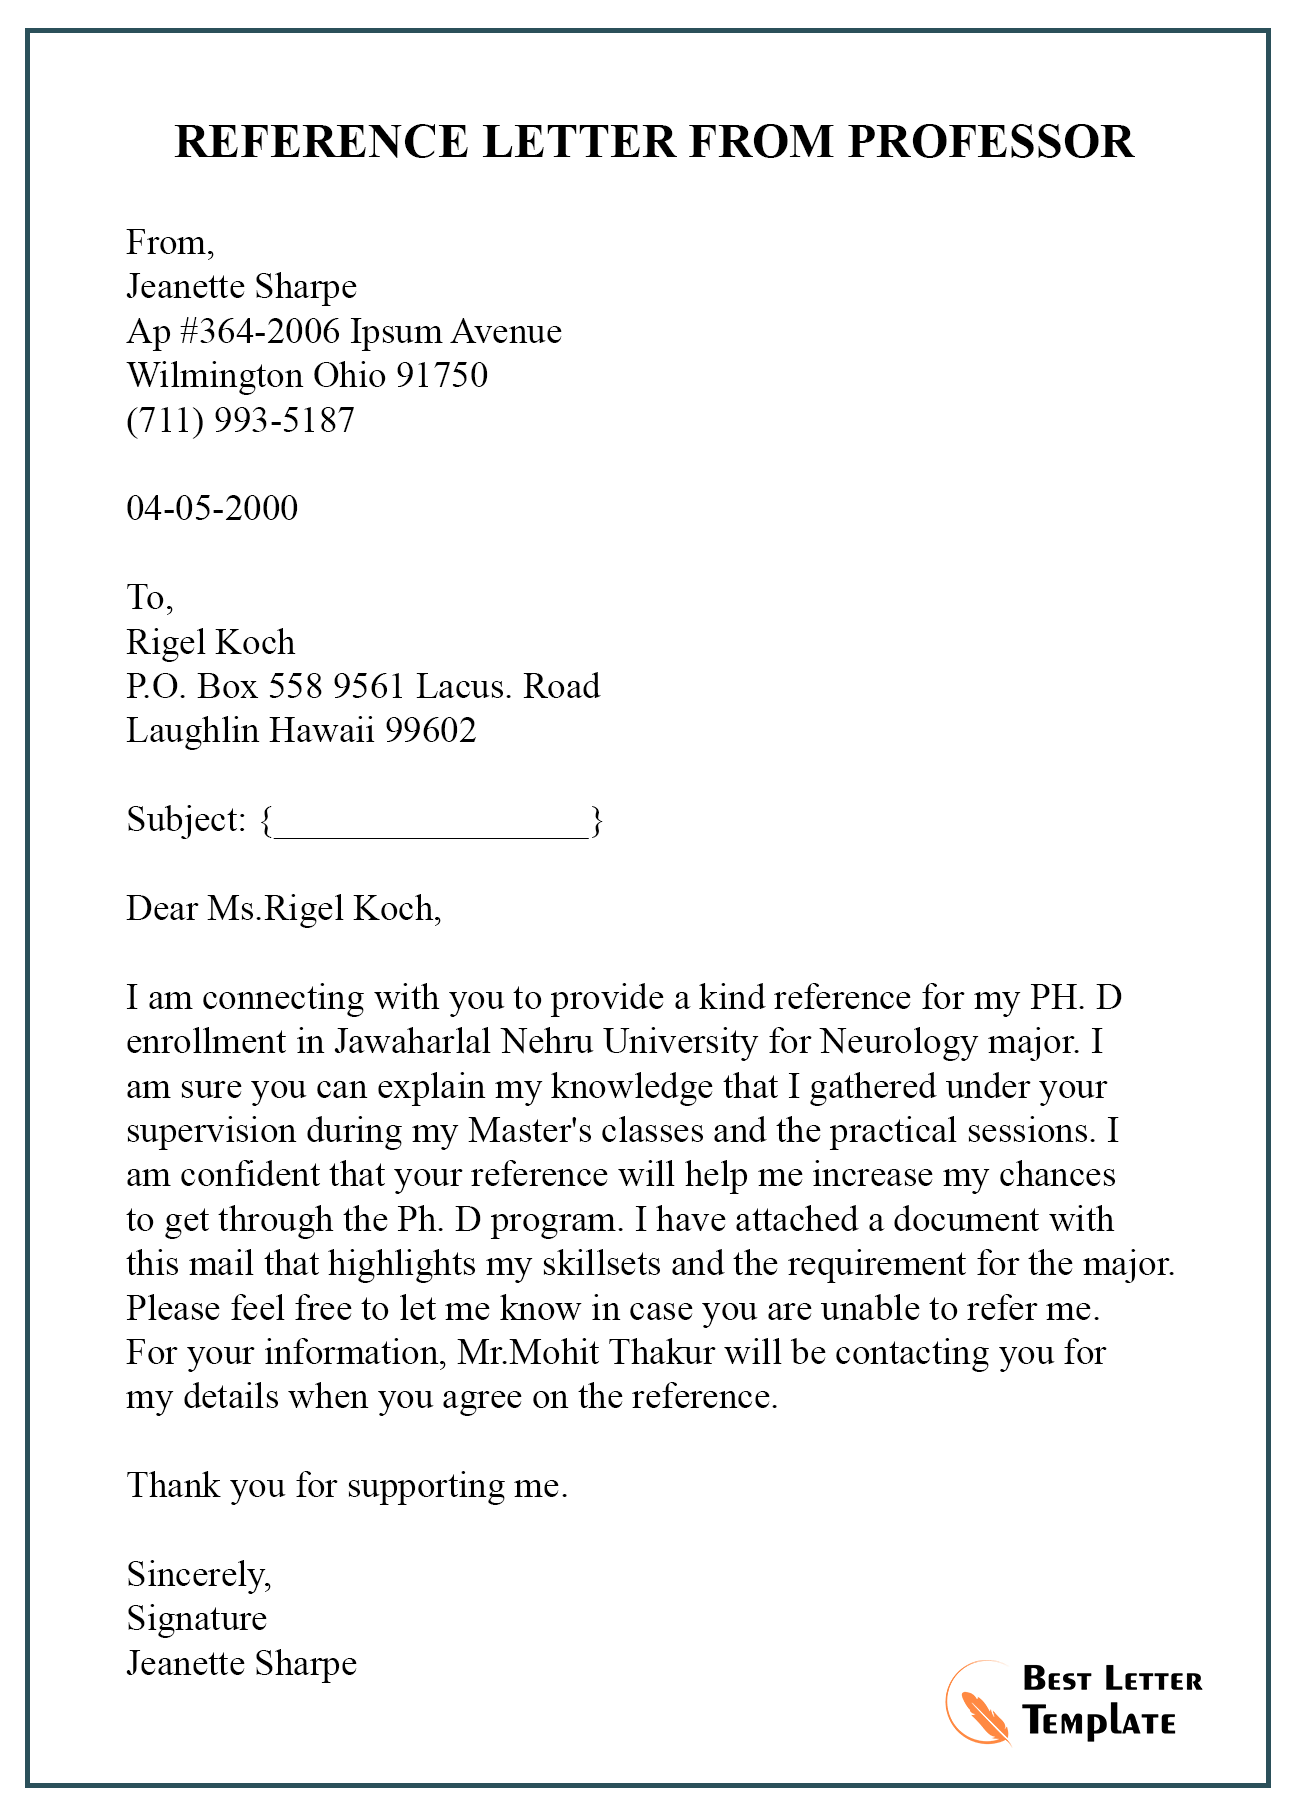 Letter Of Recommendation Professor from bestlettertemplate.com